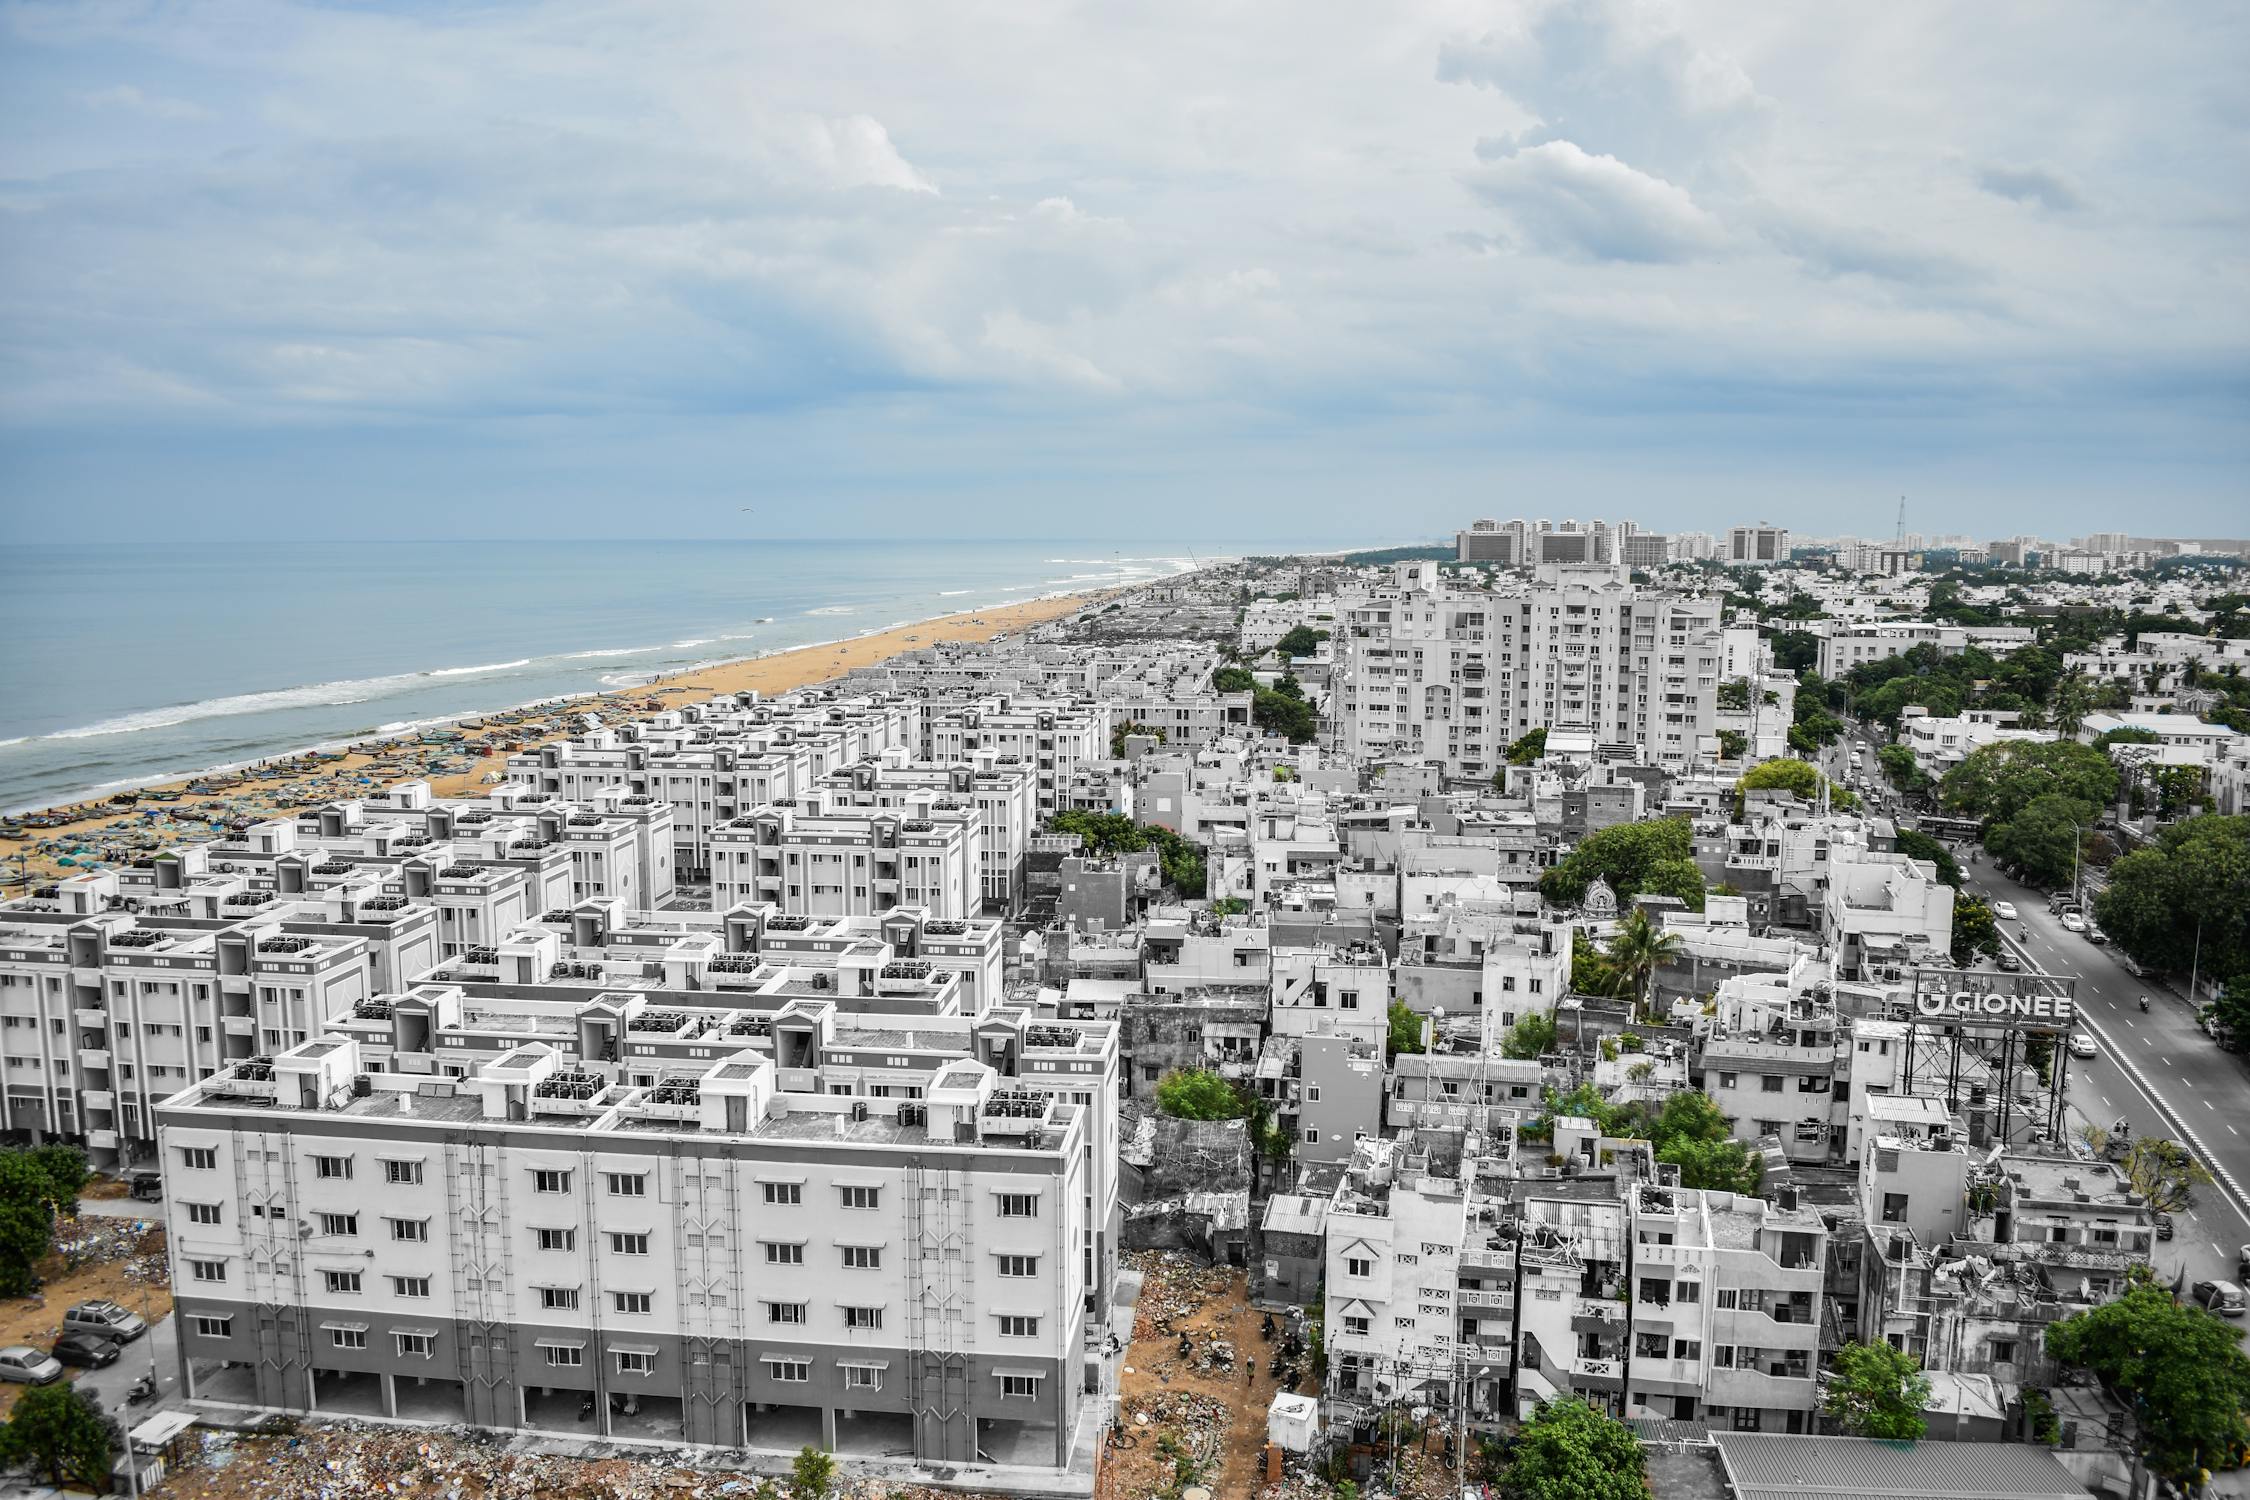 Chennai Photo by Mari pandy from Pexels